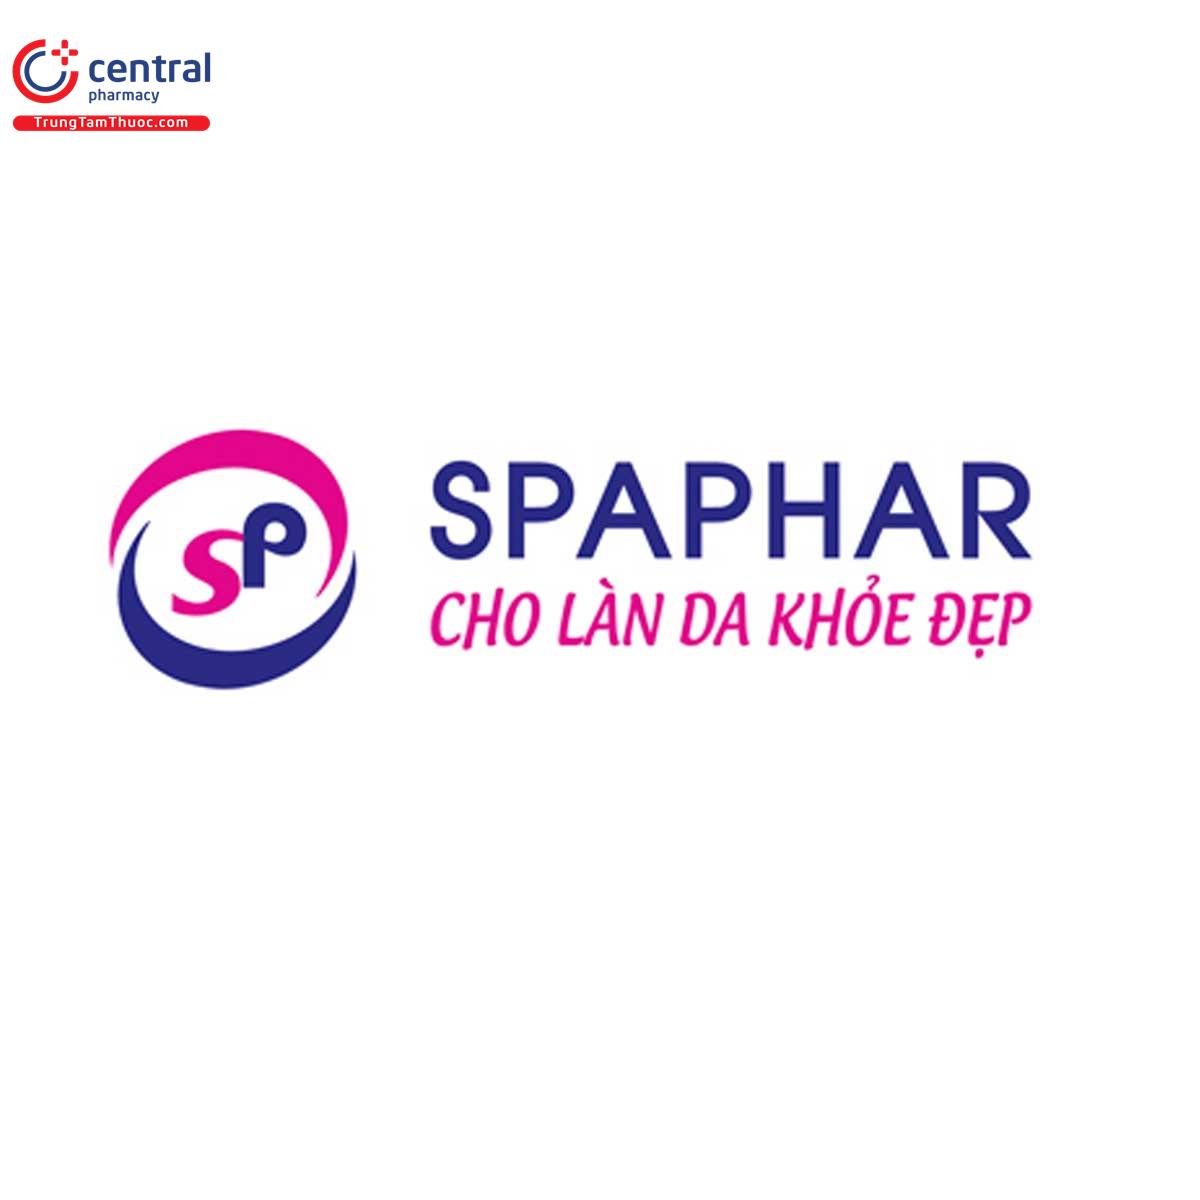 Spaphar